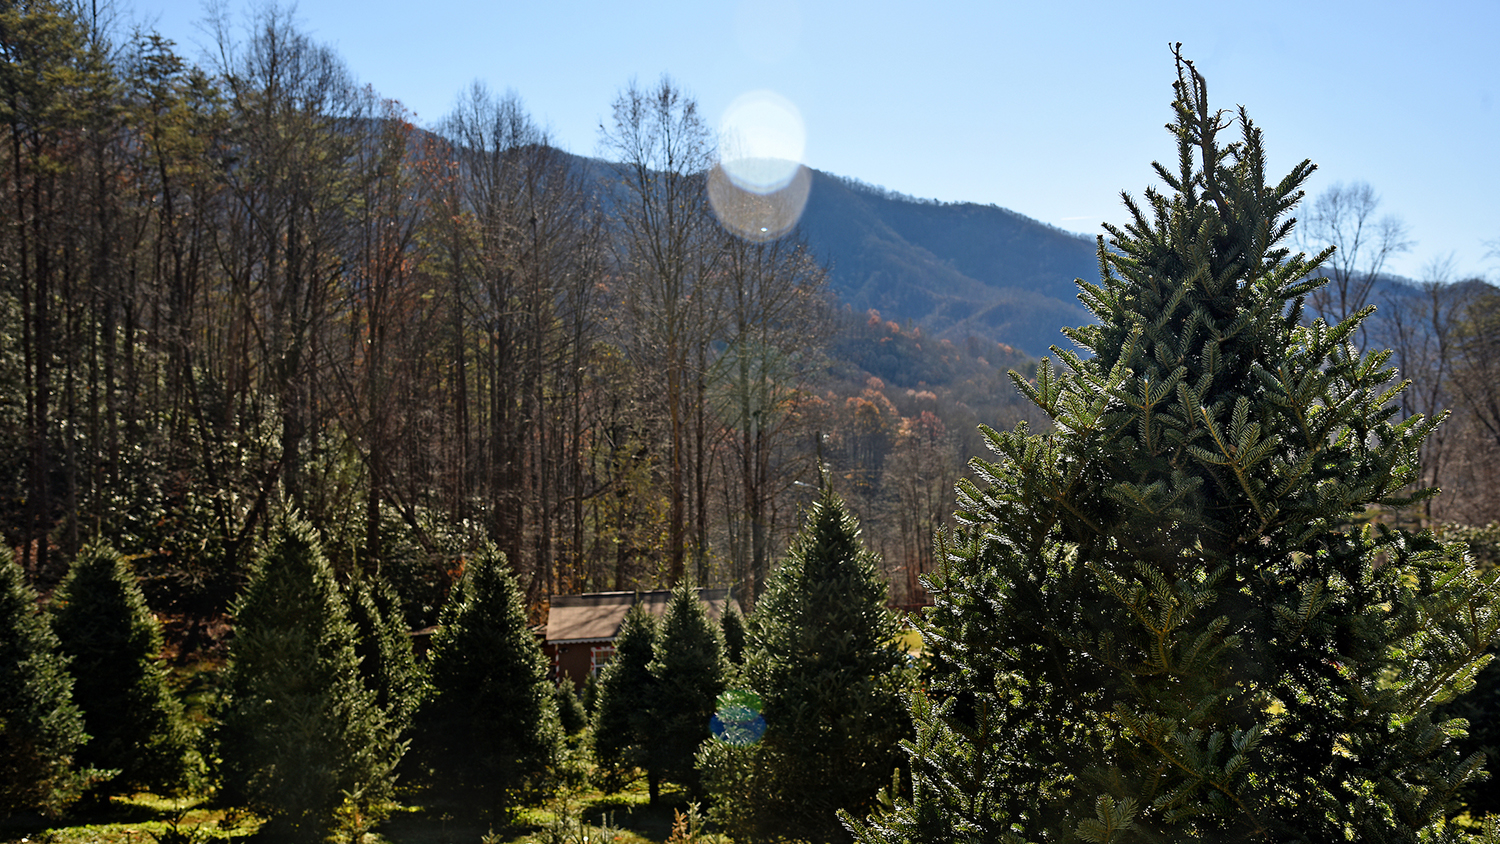 Christmas tree farm in North Carolina